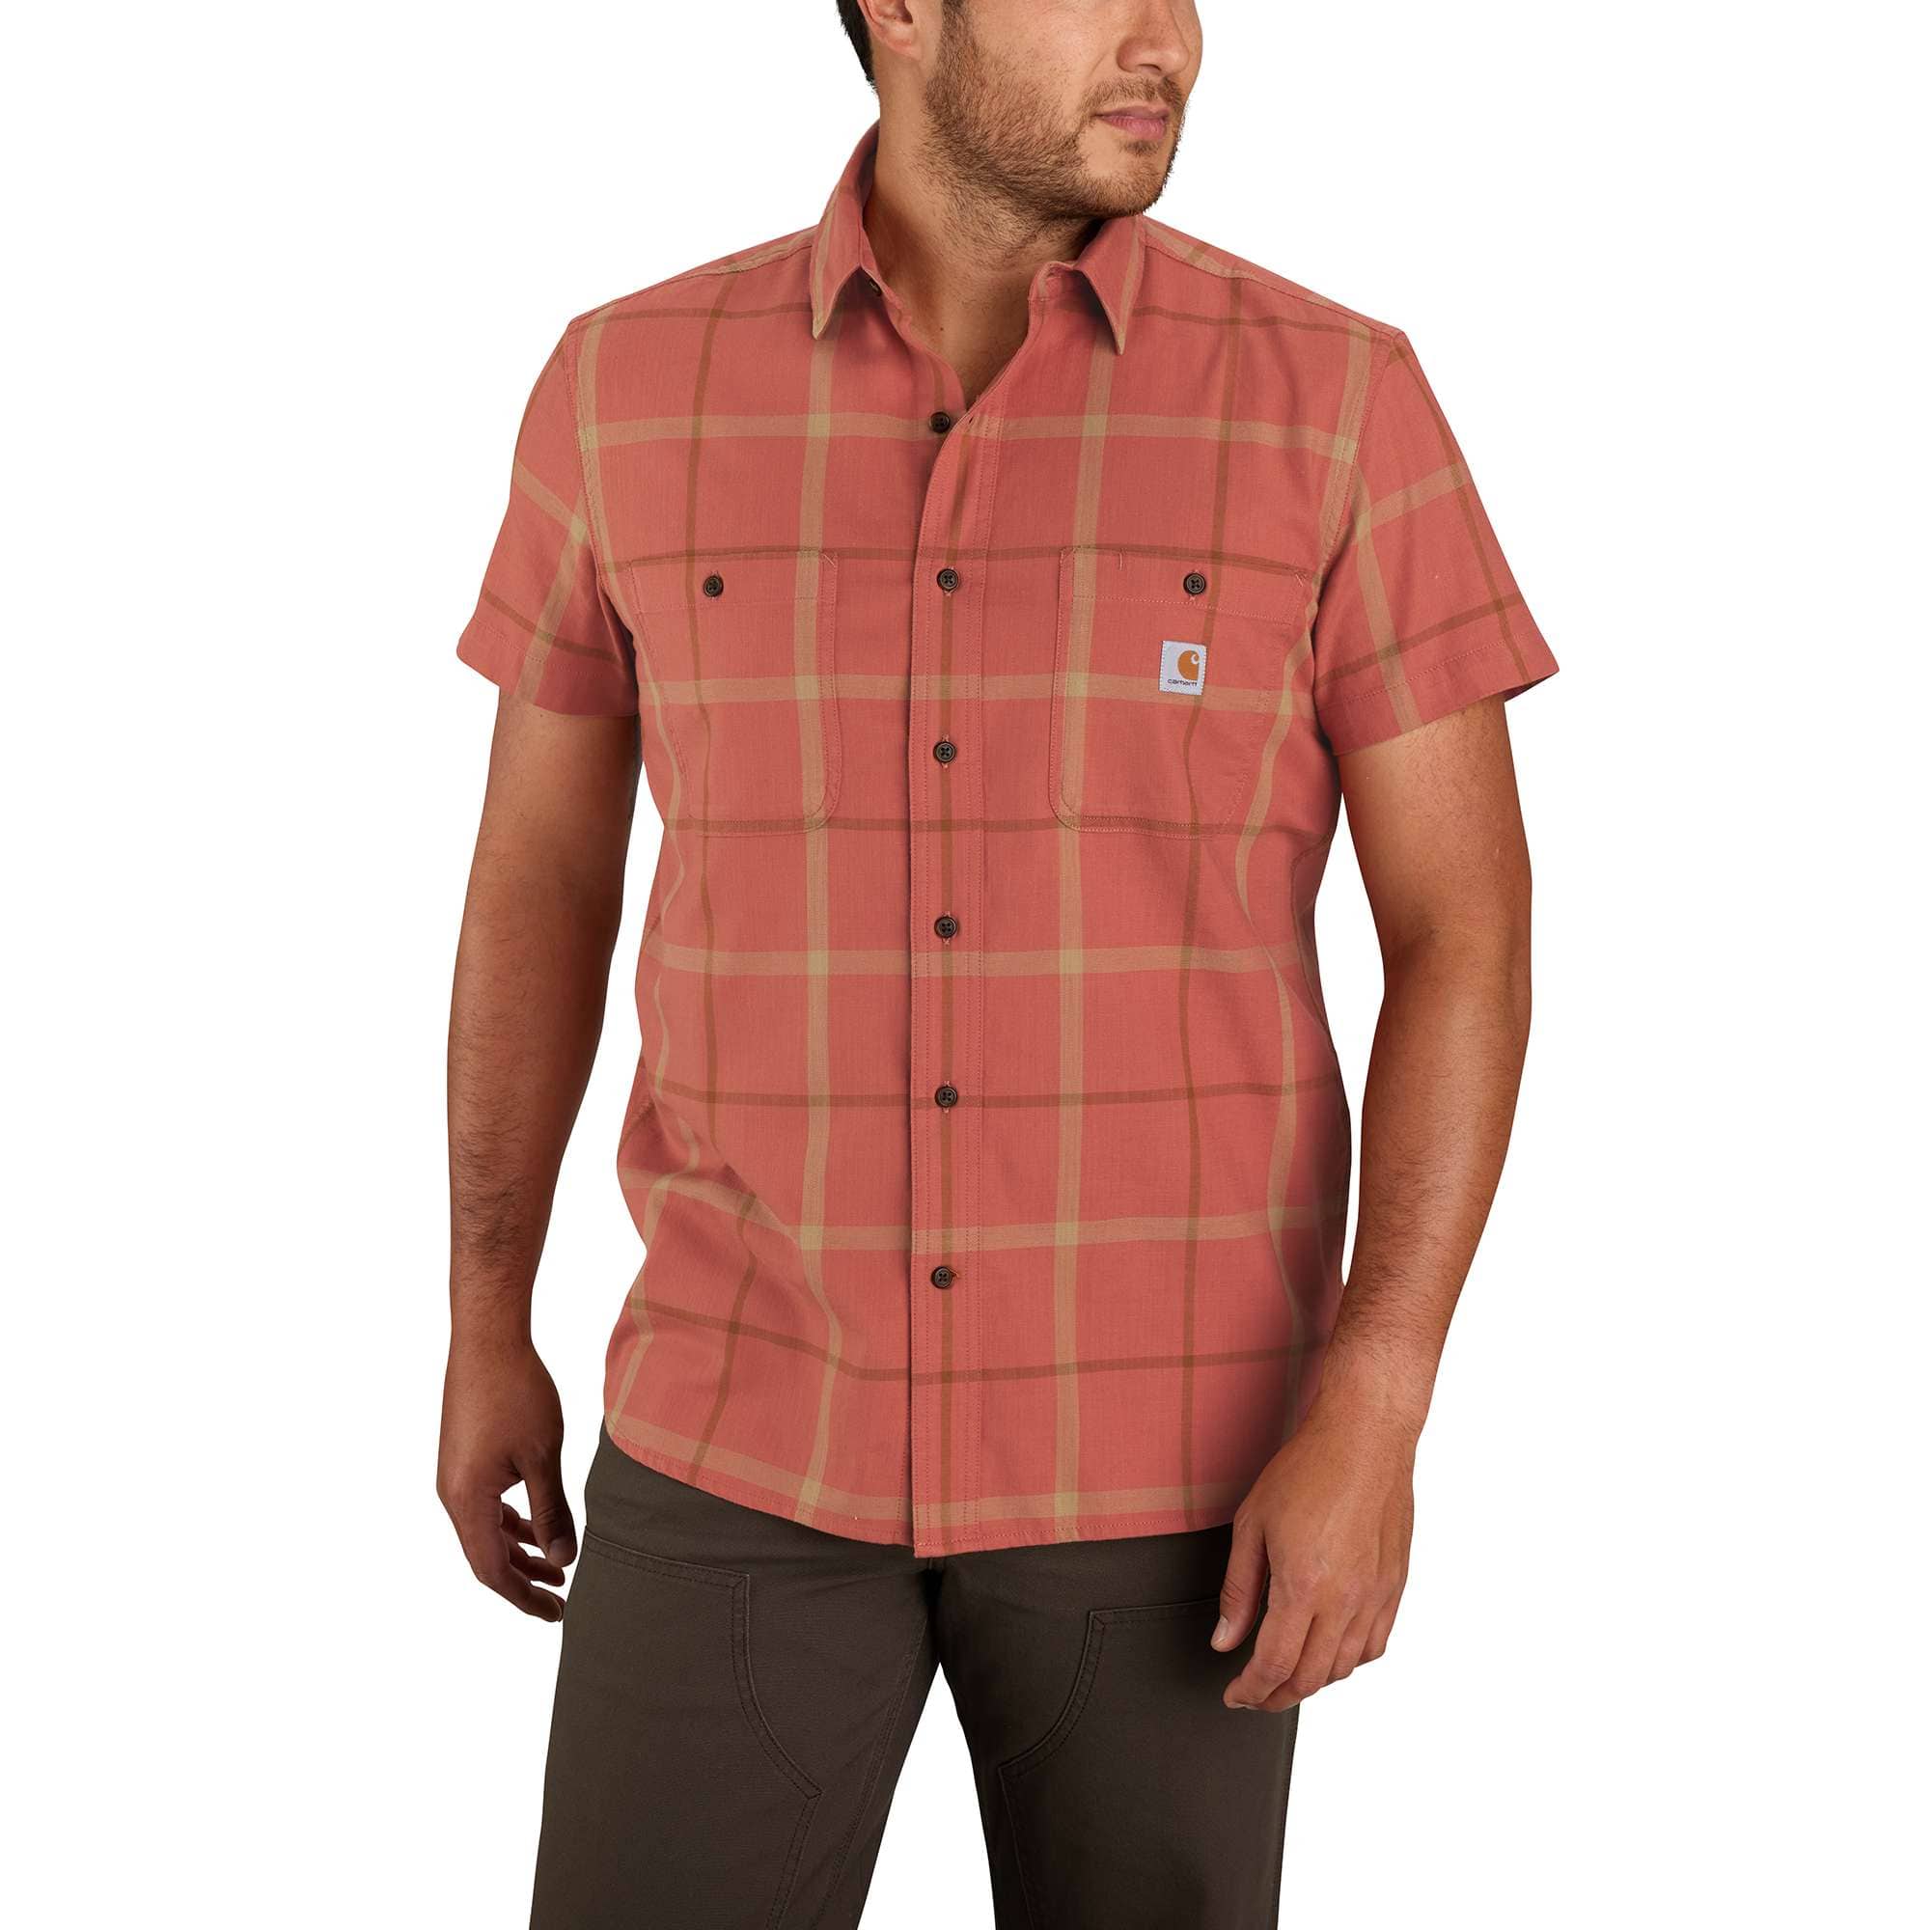 ButtonMode Industrial Shirt Buttons (Fits Carhartt, Dickies, Red